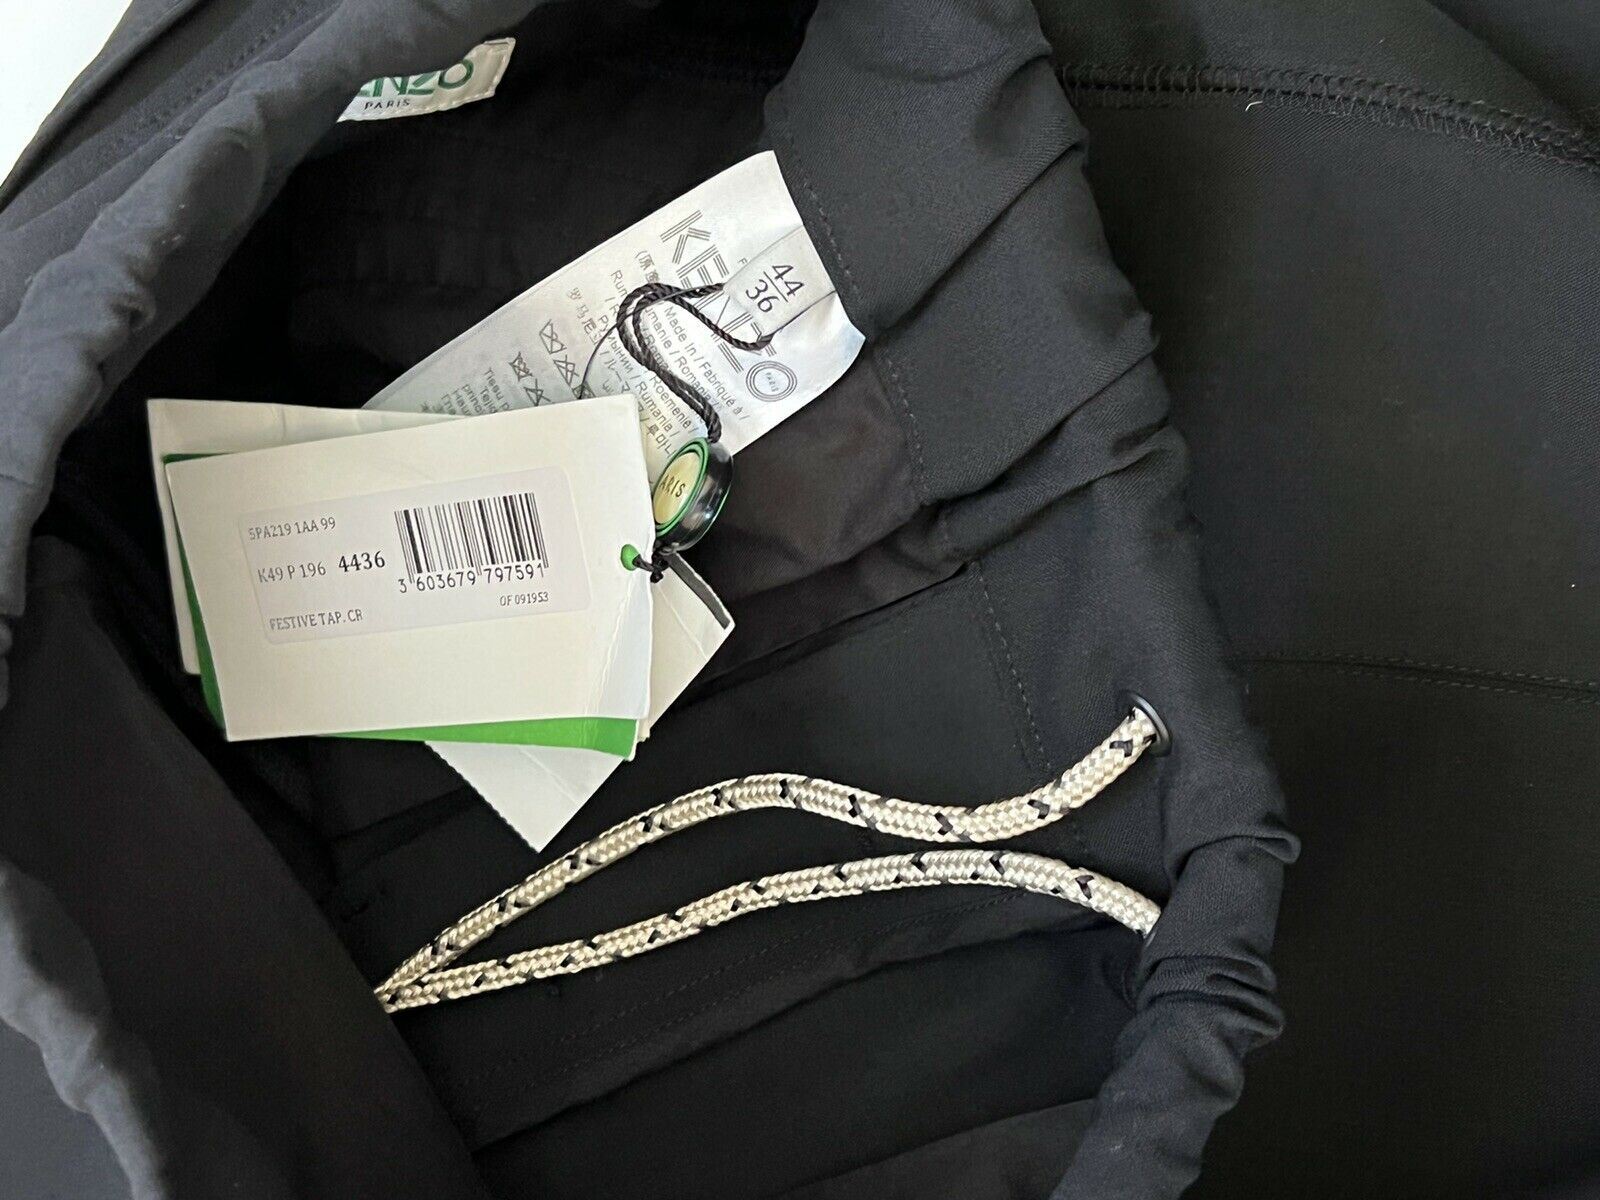 NWT $370 Kenzo Men's Black Festive Wool Casual Pants Size 28 US (44 Euro)